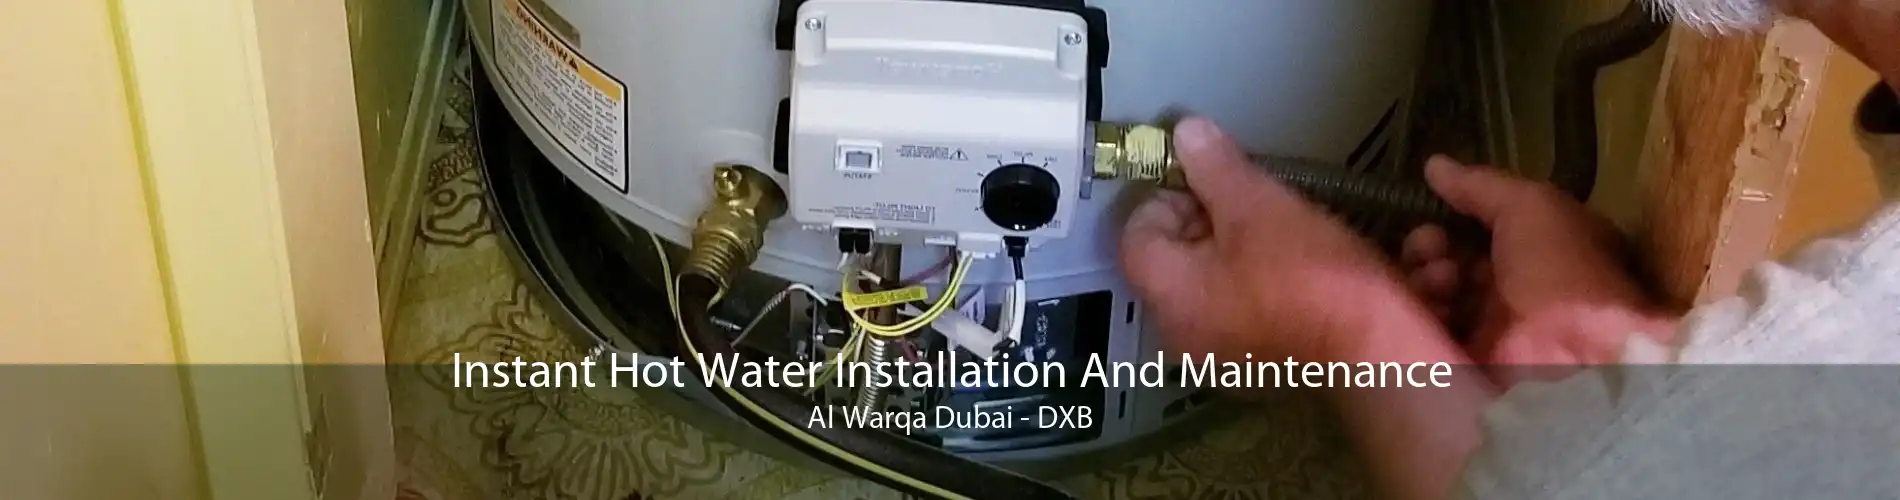 Instant Hot Water Installation And Maintenance Al Warqa Dubai - DXB